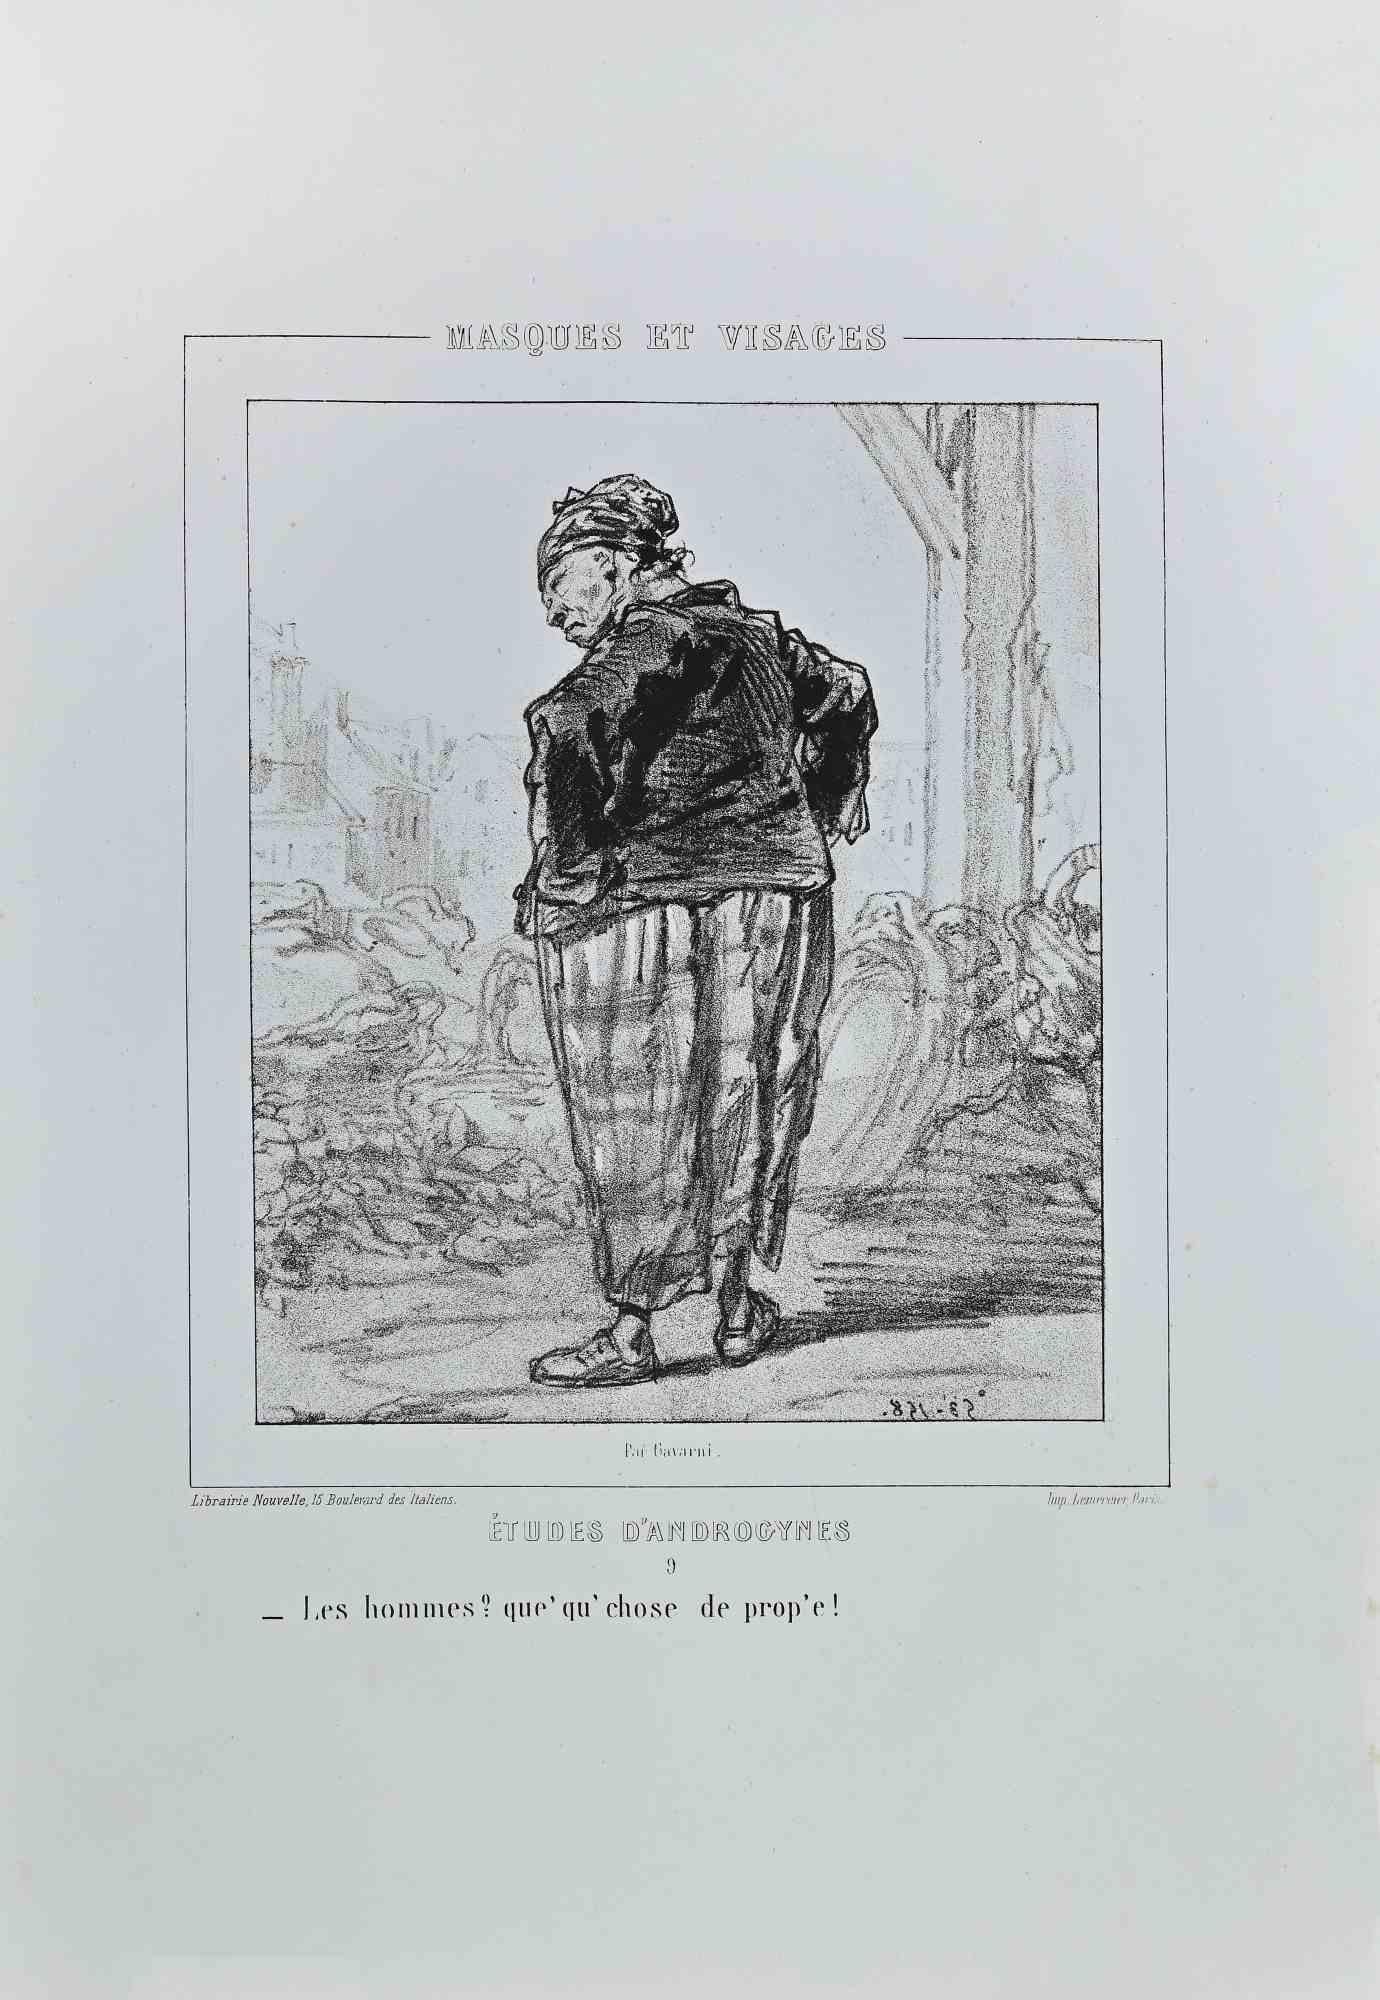 Etudes d'Androgynes - Lithograph by Paul Gavarni - 1850s